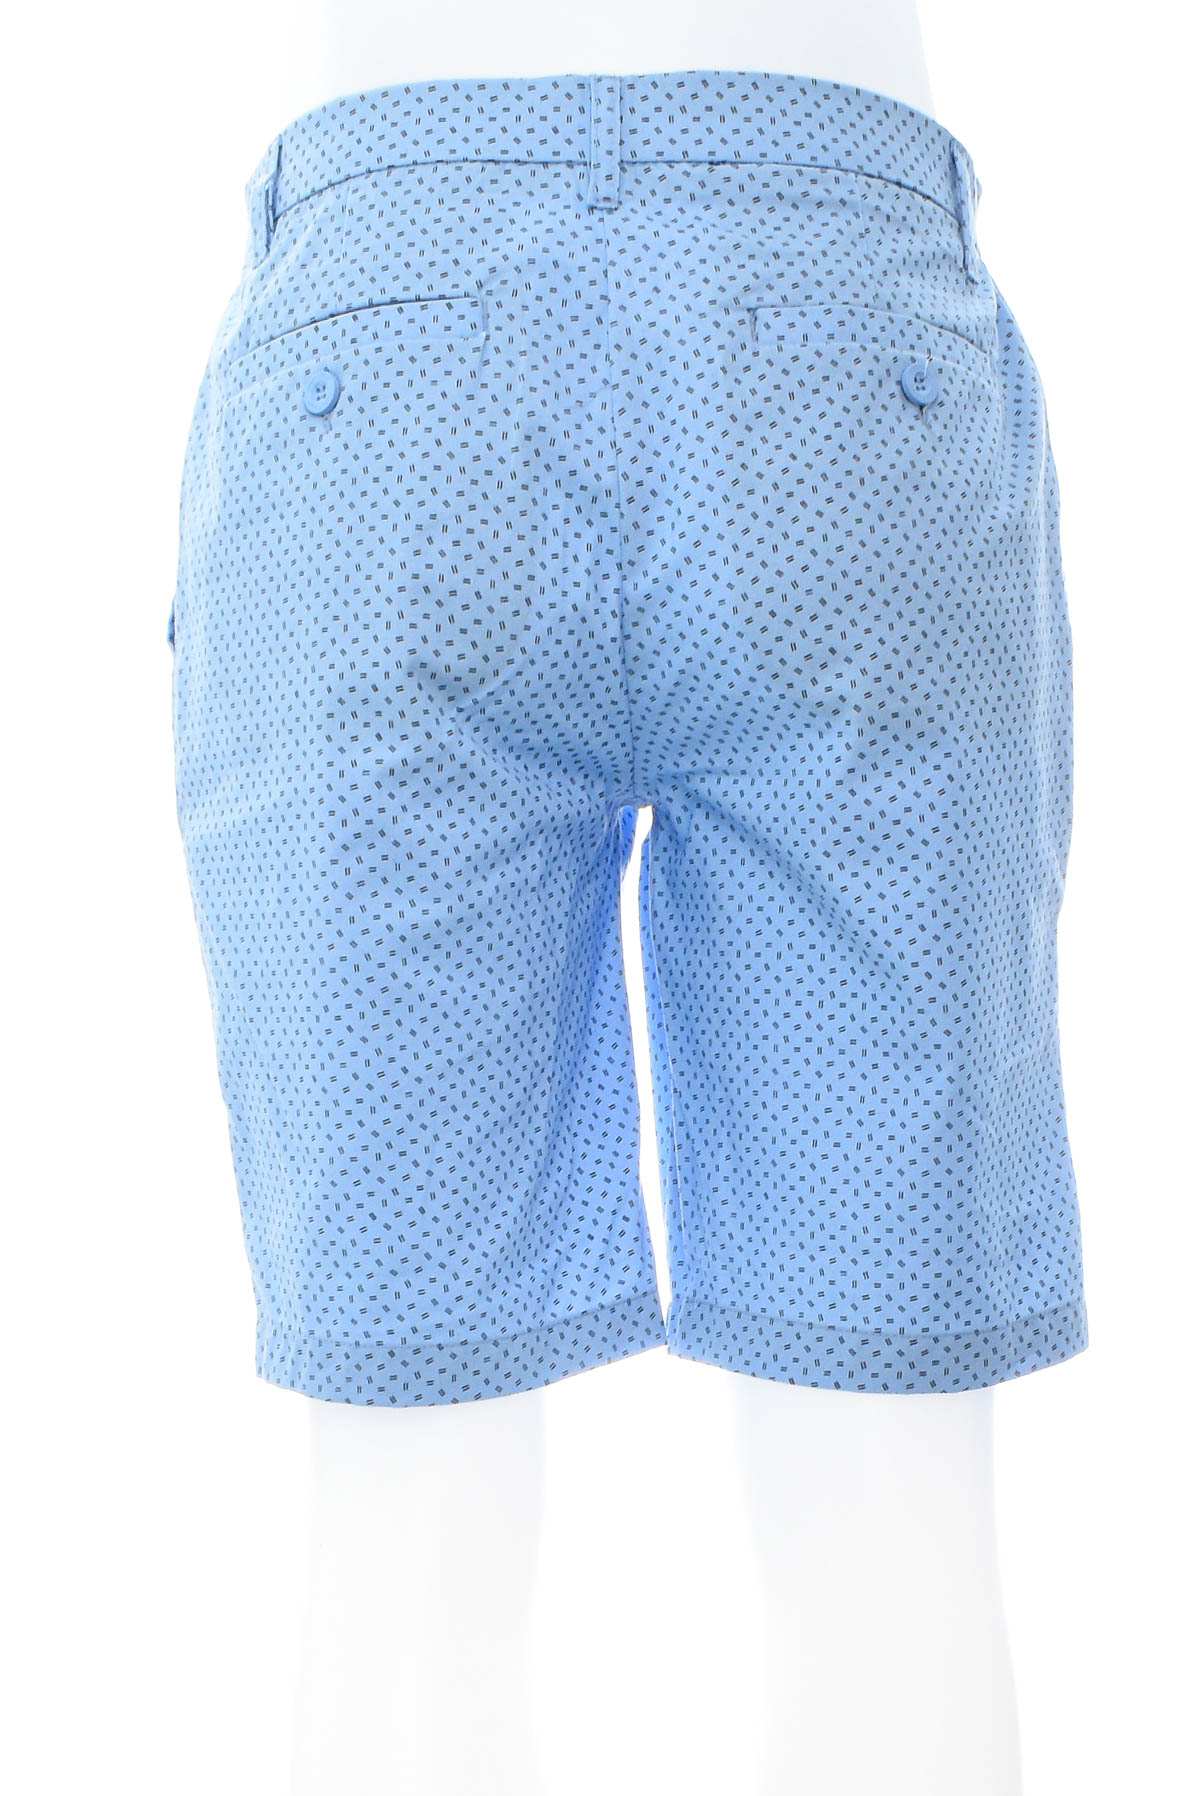 Men's shorts - OR oakrige - 1